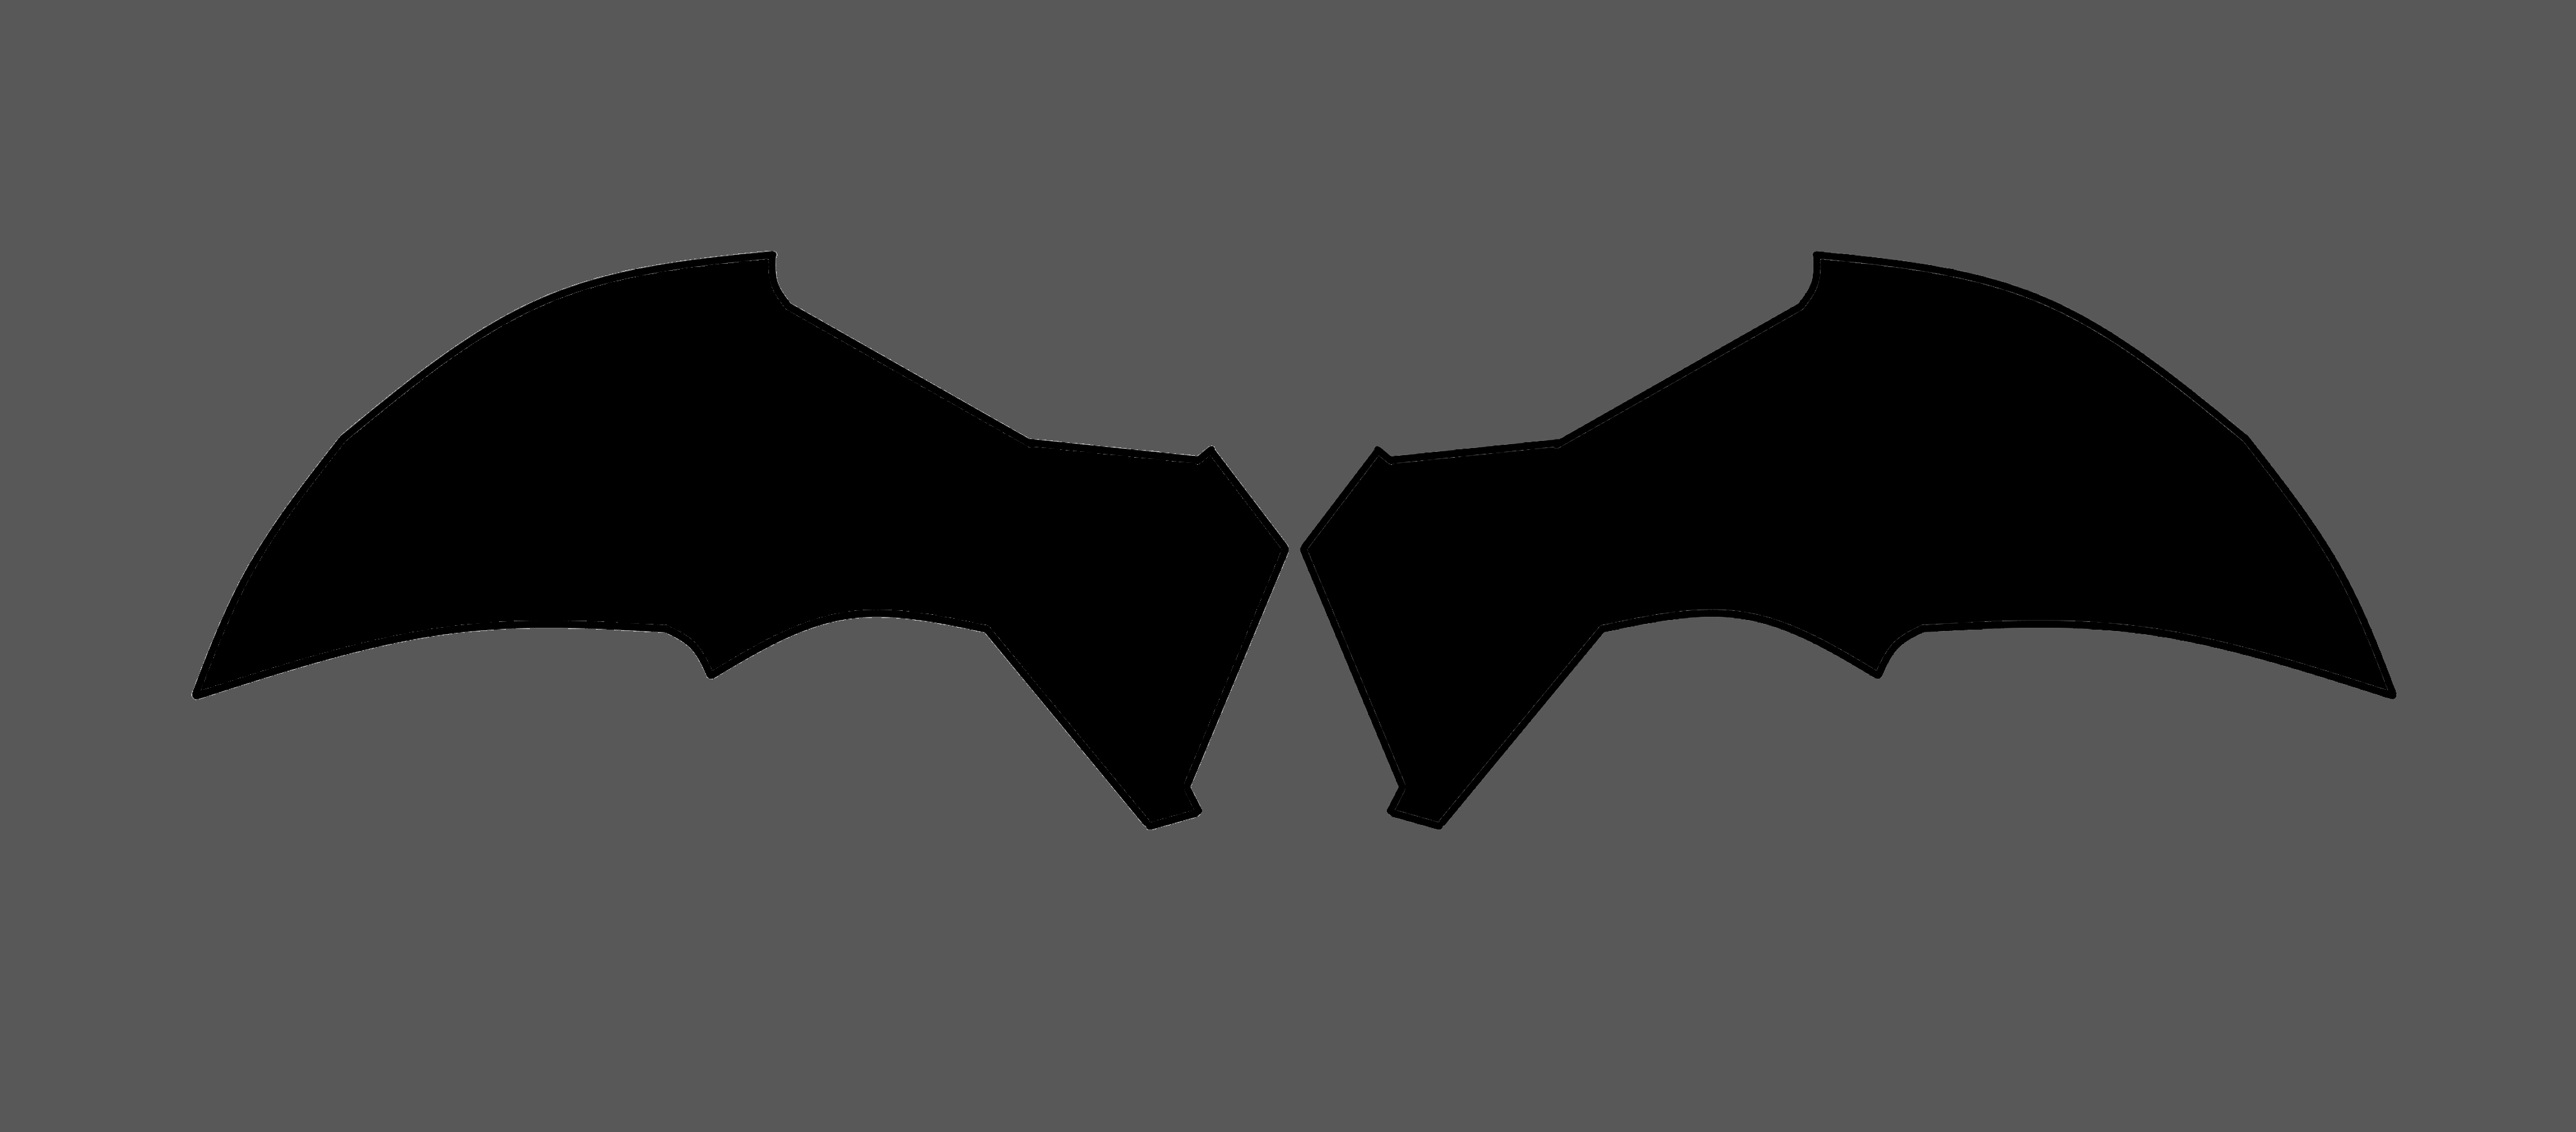 Batman Symbol 19 by Mlgpirate01 on DeviantArt